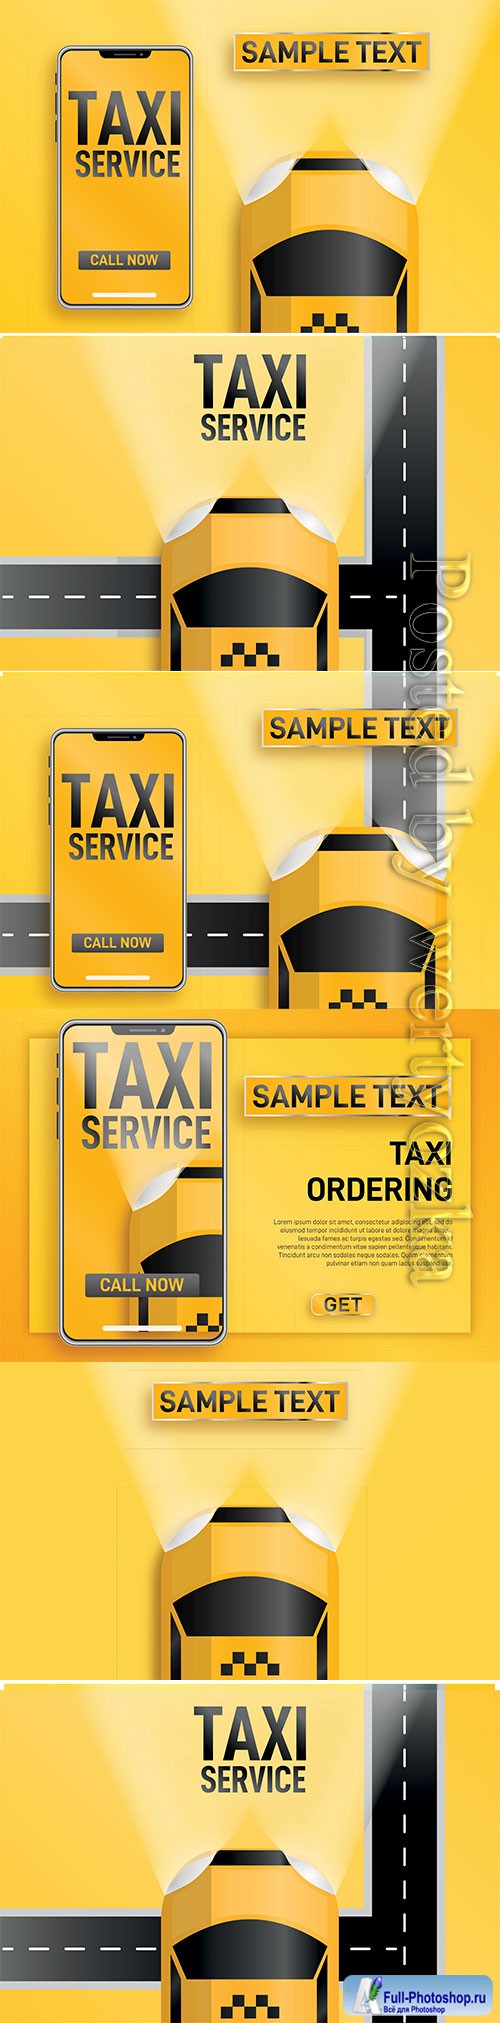 Taxi service online vector illustration